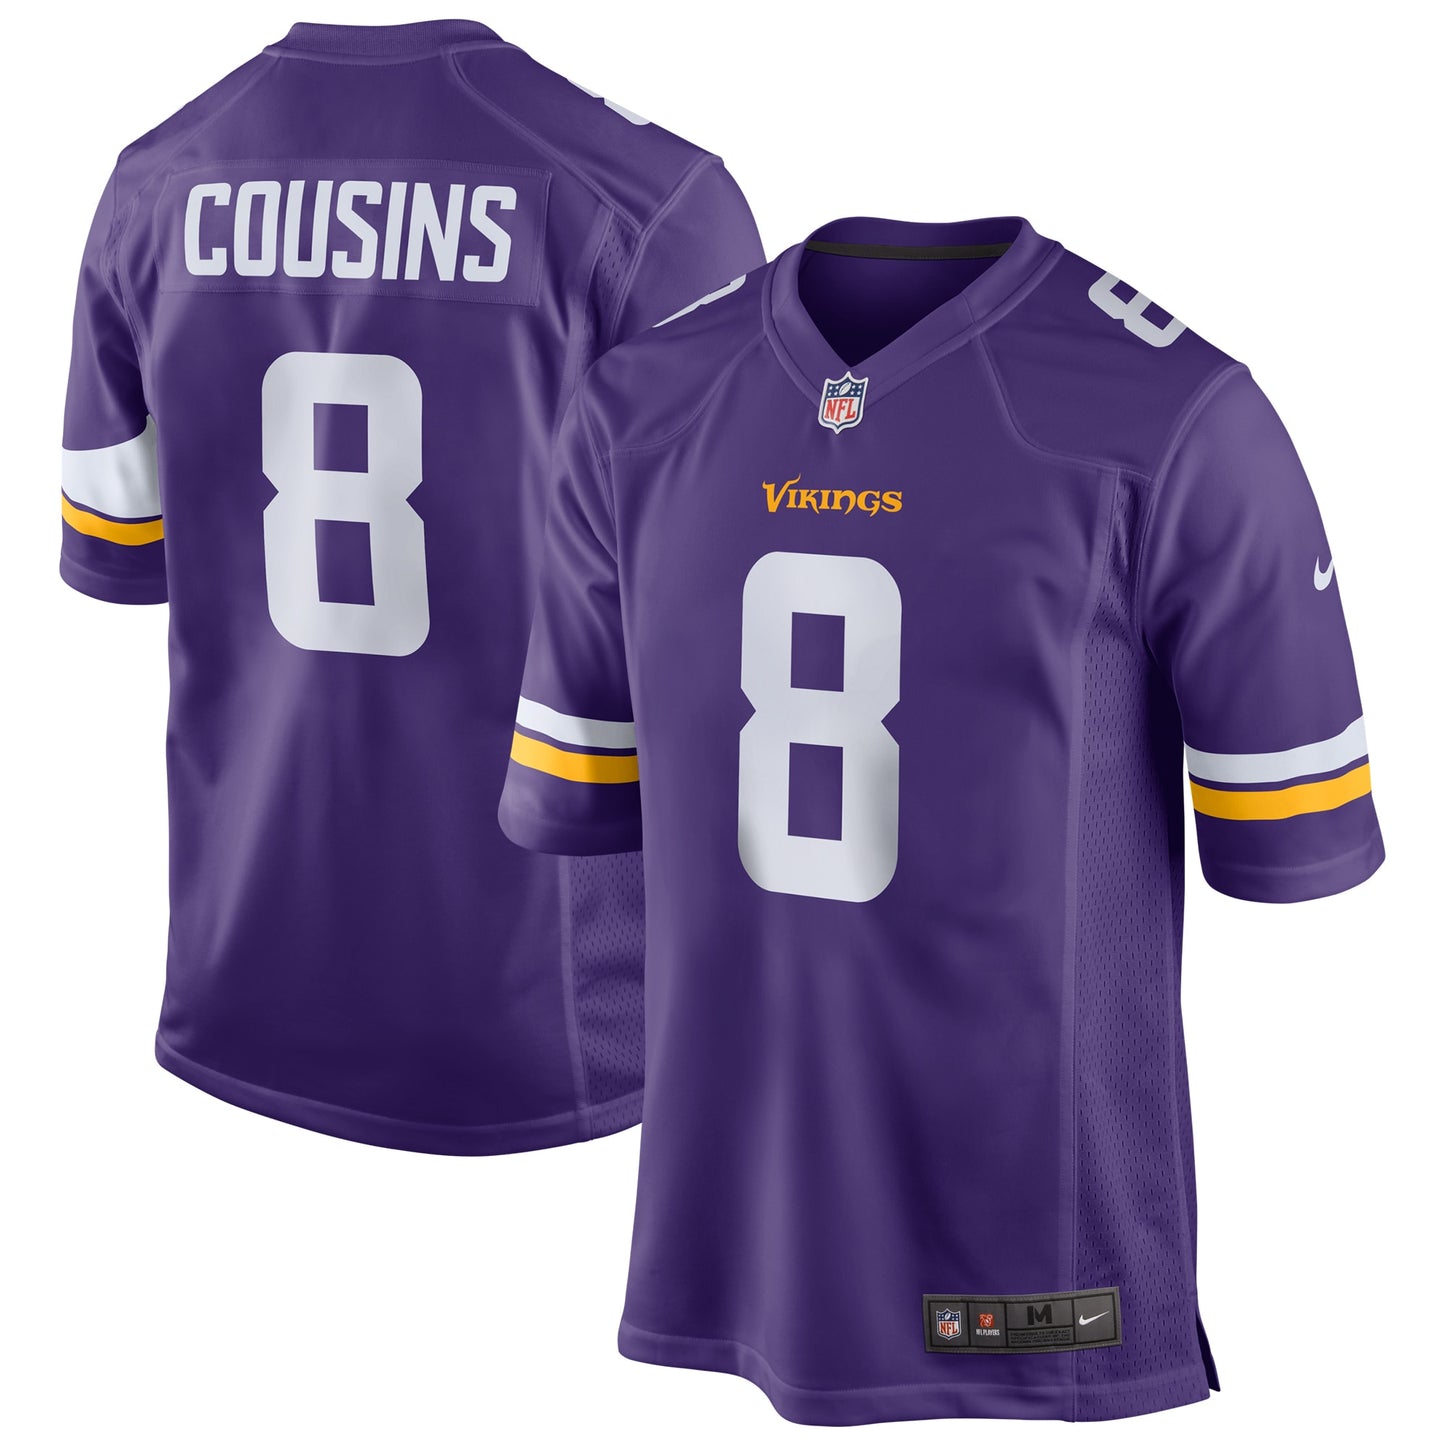 Kirk Cousins Minnesota Vikings Nike Game Jersey - Purple